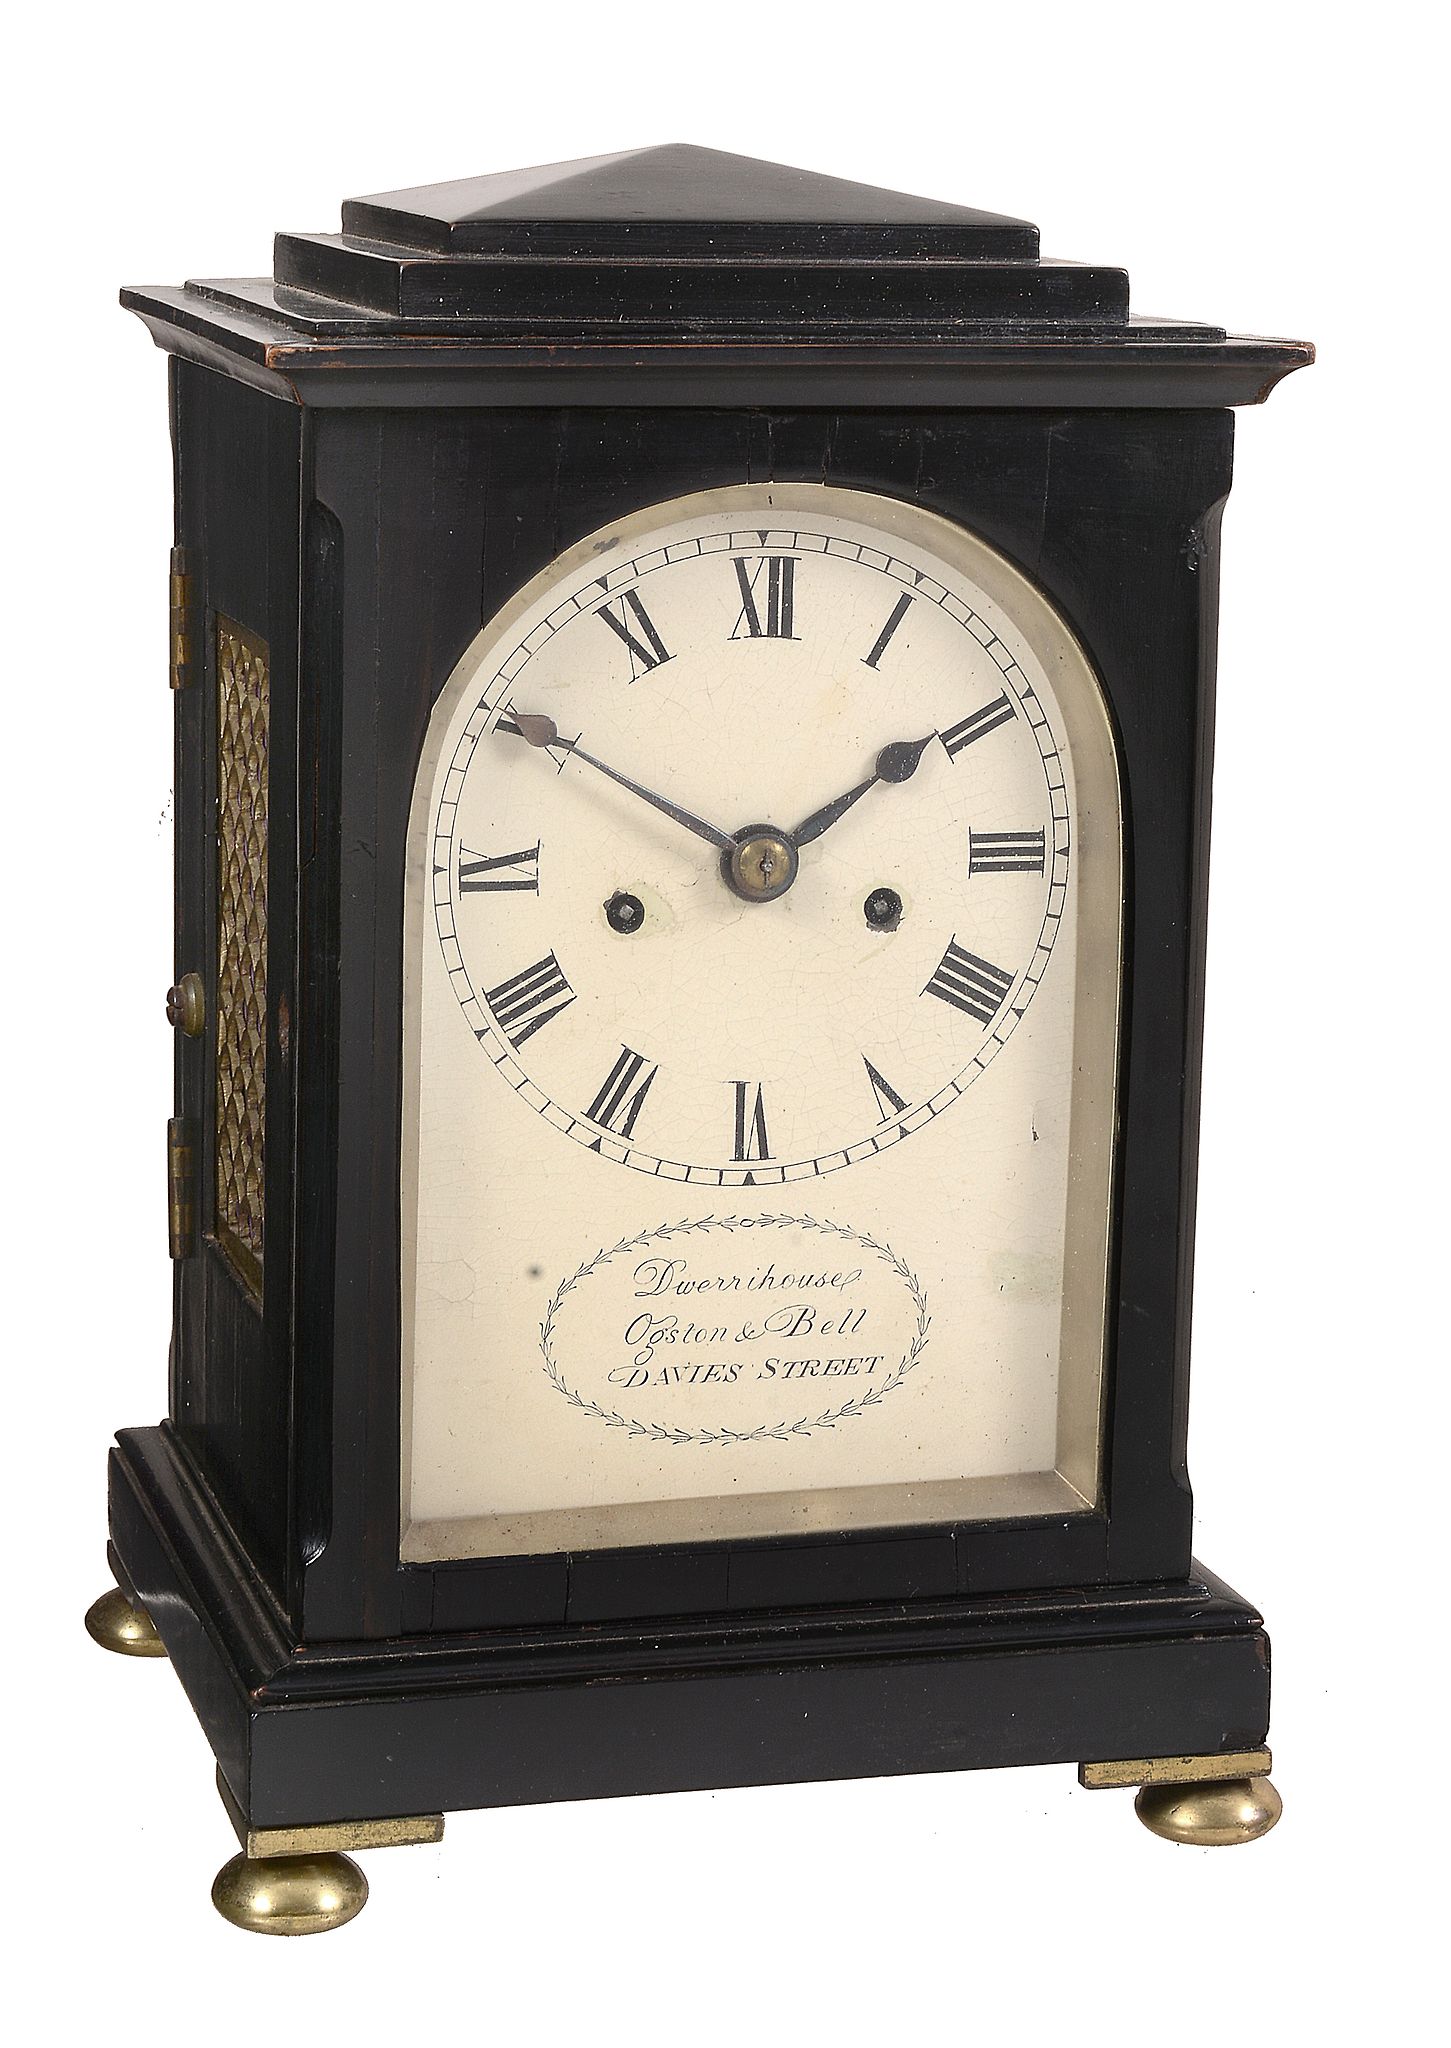 A William IV small ebonised table clock Dwerrihouse, Ogston and Bell, London   A William IV small